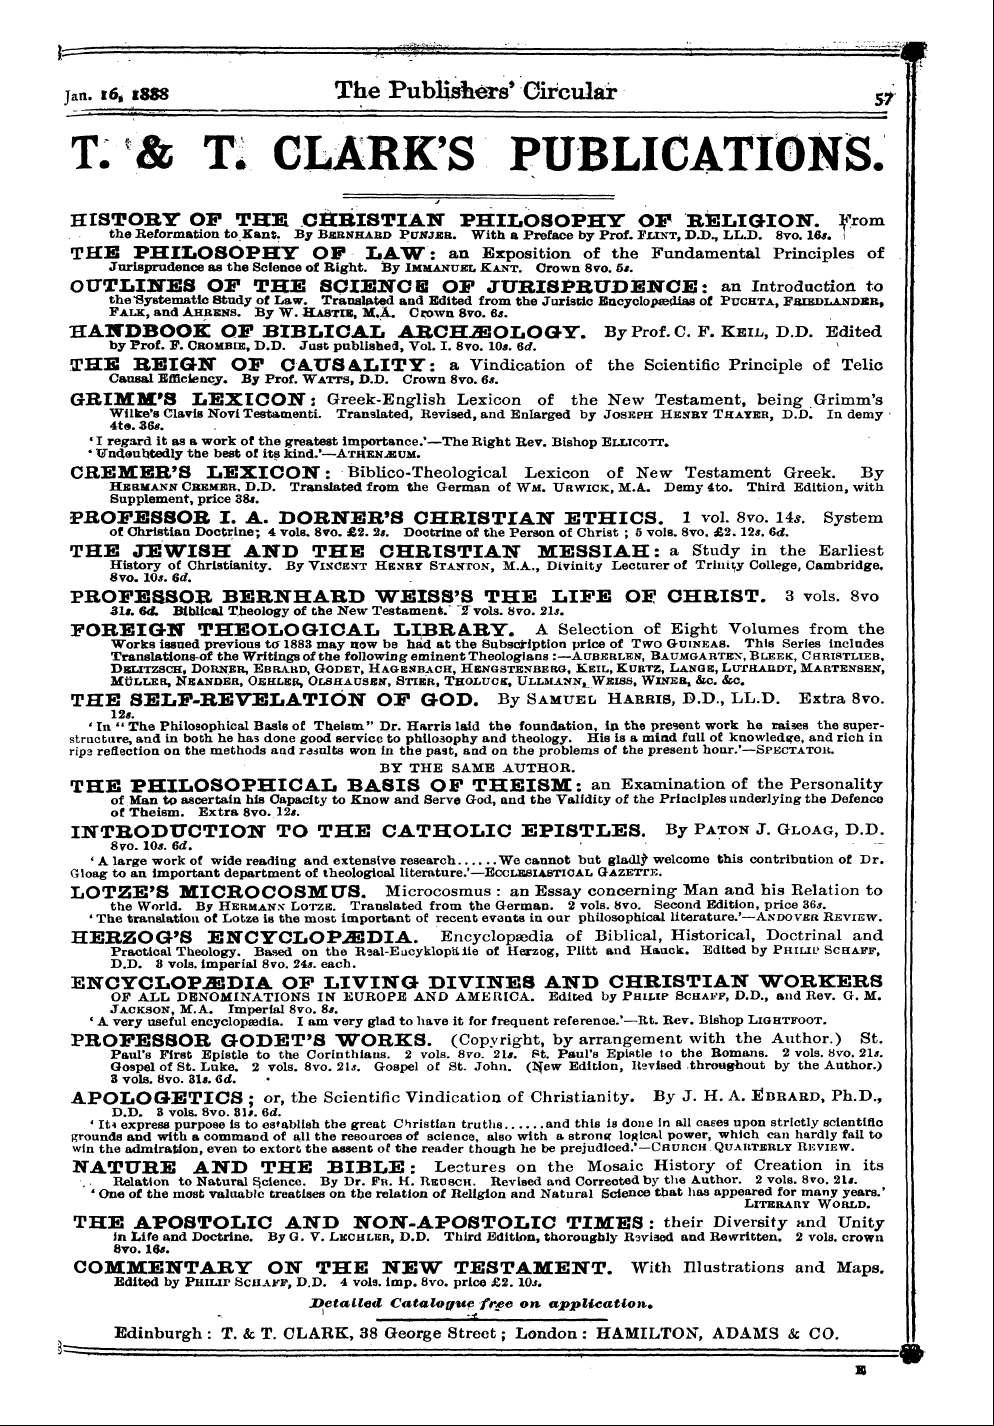 Publishers’ Circular (1880-1890): jS F Y, 1st edition: 59